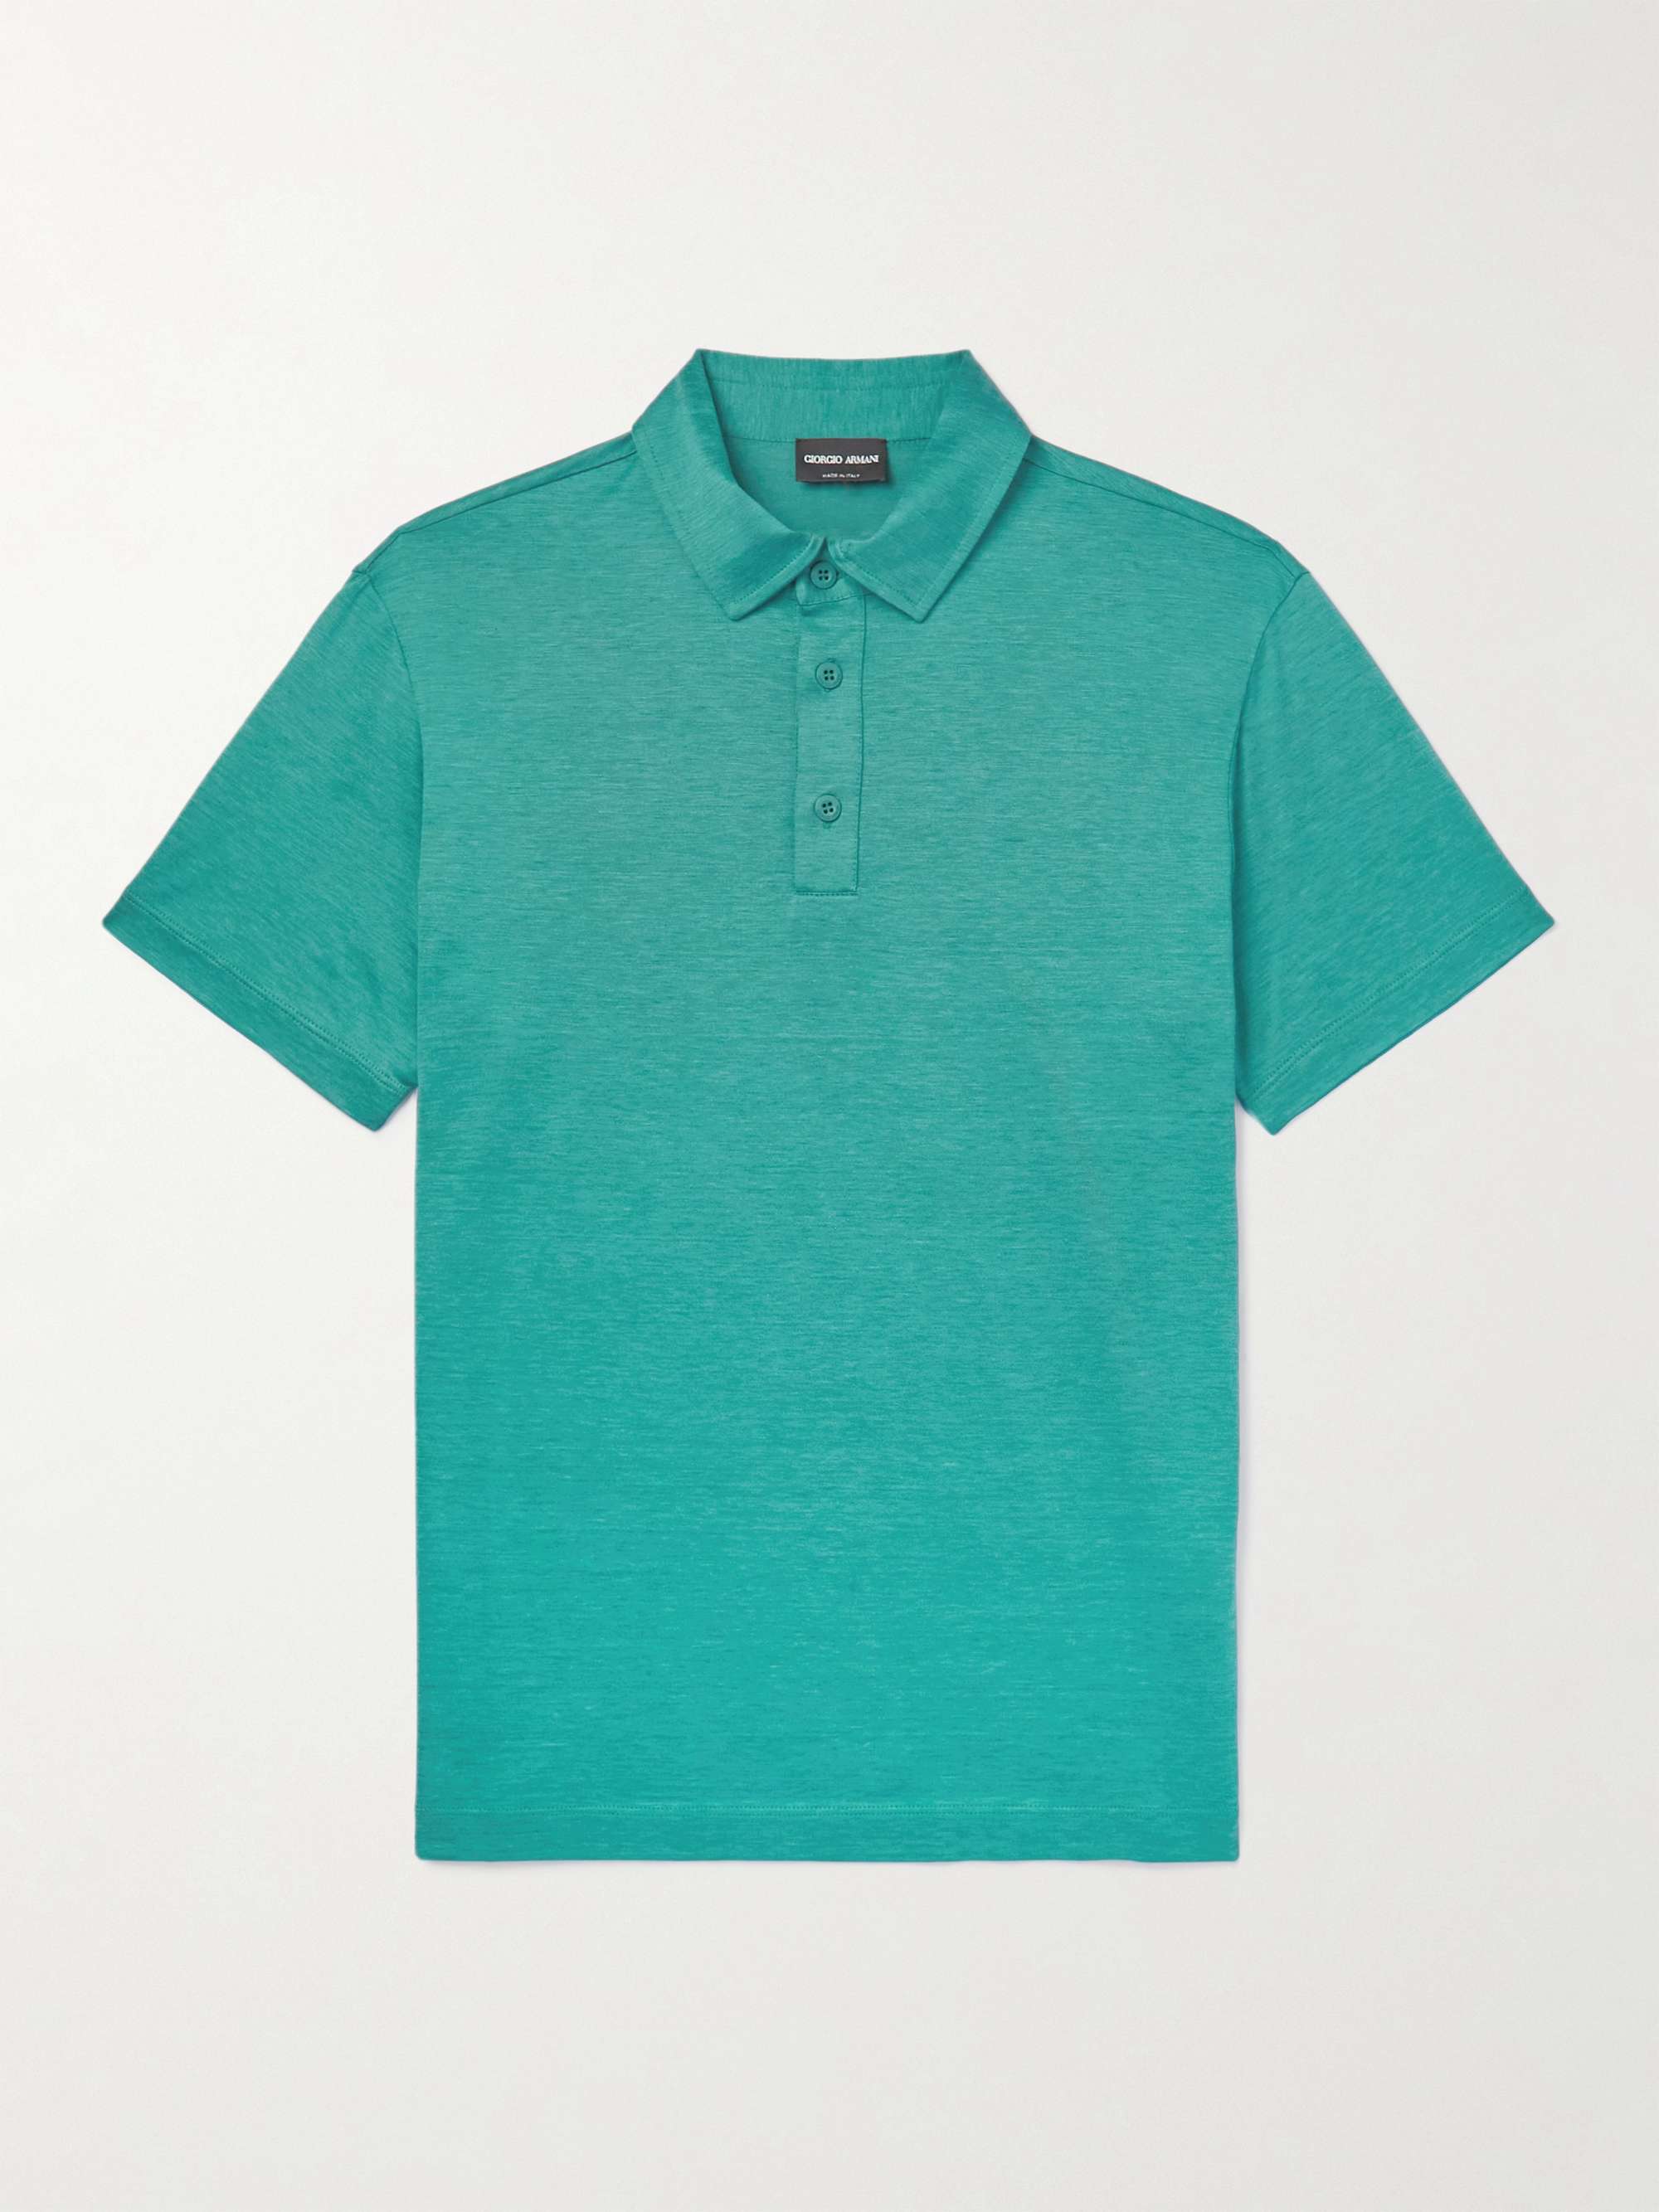 GIORGIO ARMANI Slim-Fit Silk and Cotton-Blend Polo Shirt | MR PORTER